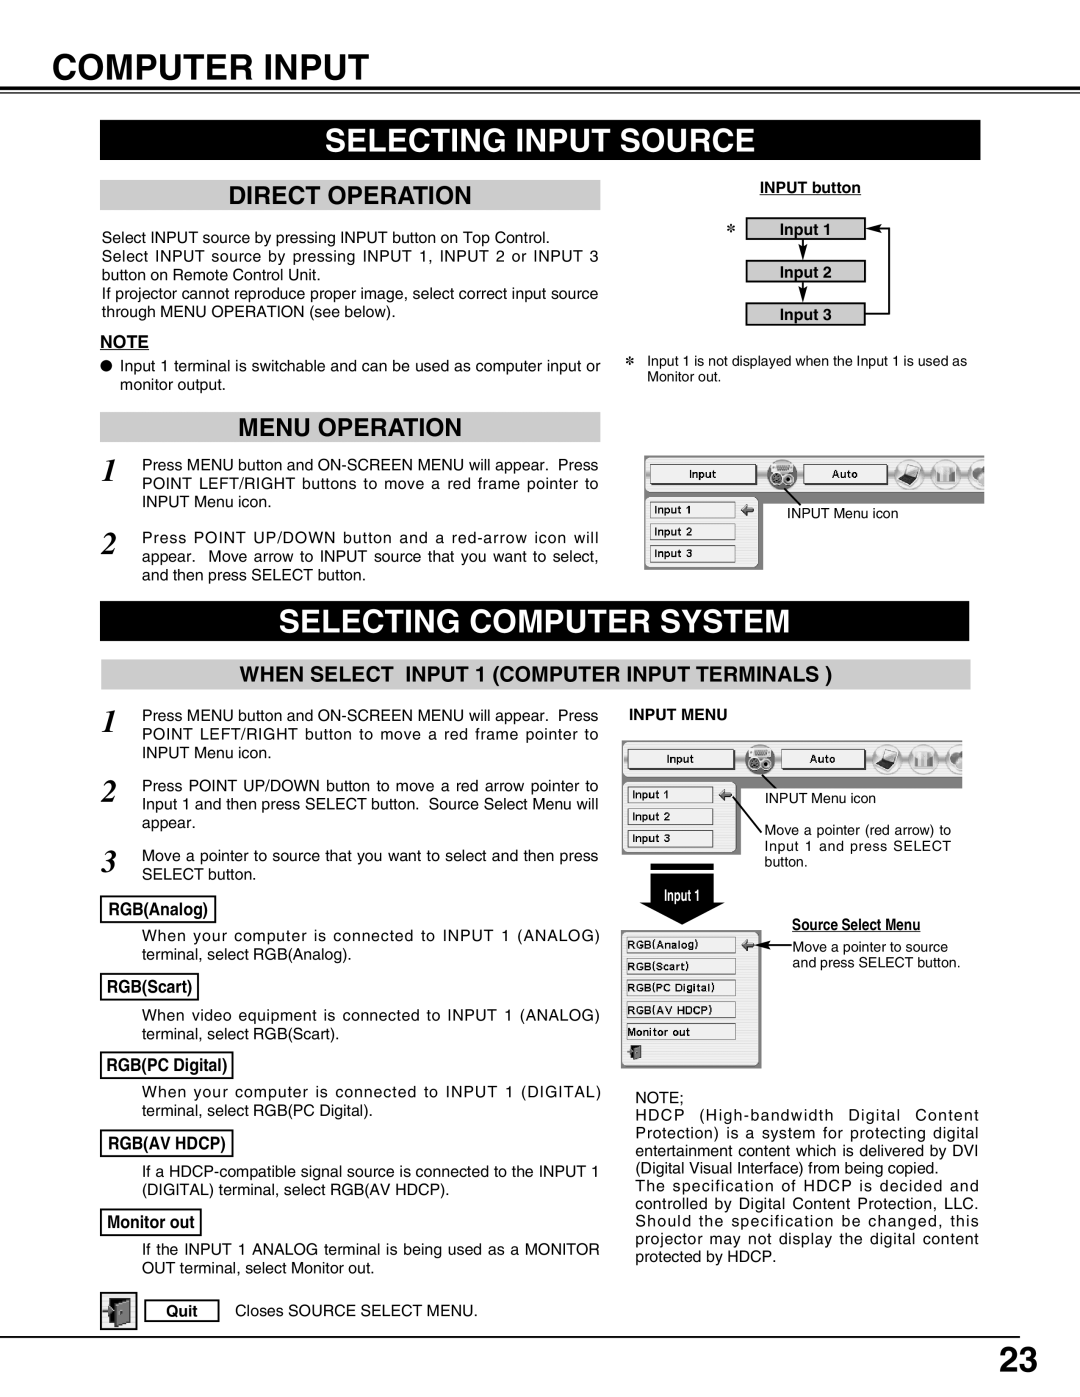 Eiki LC-X70 Computer Input, Selecting Input Source, Selecting Computer System, Direct Operation, Menu Operation, Quit 